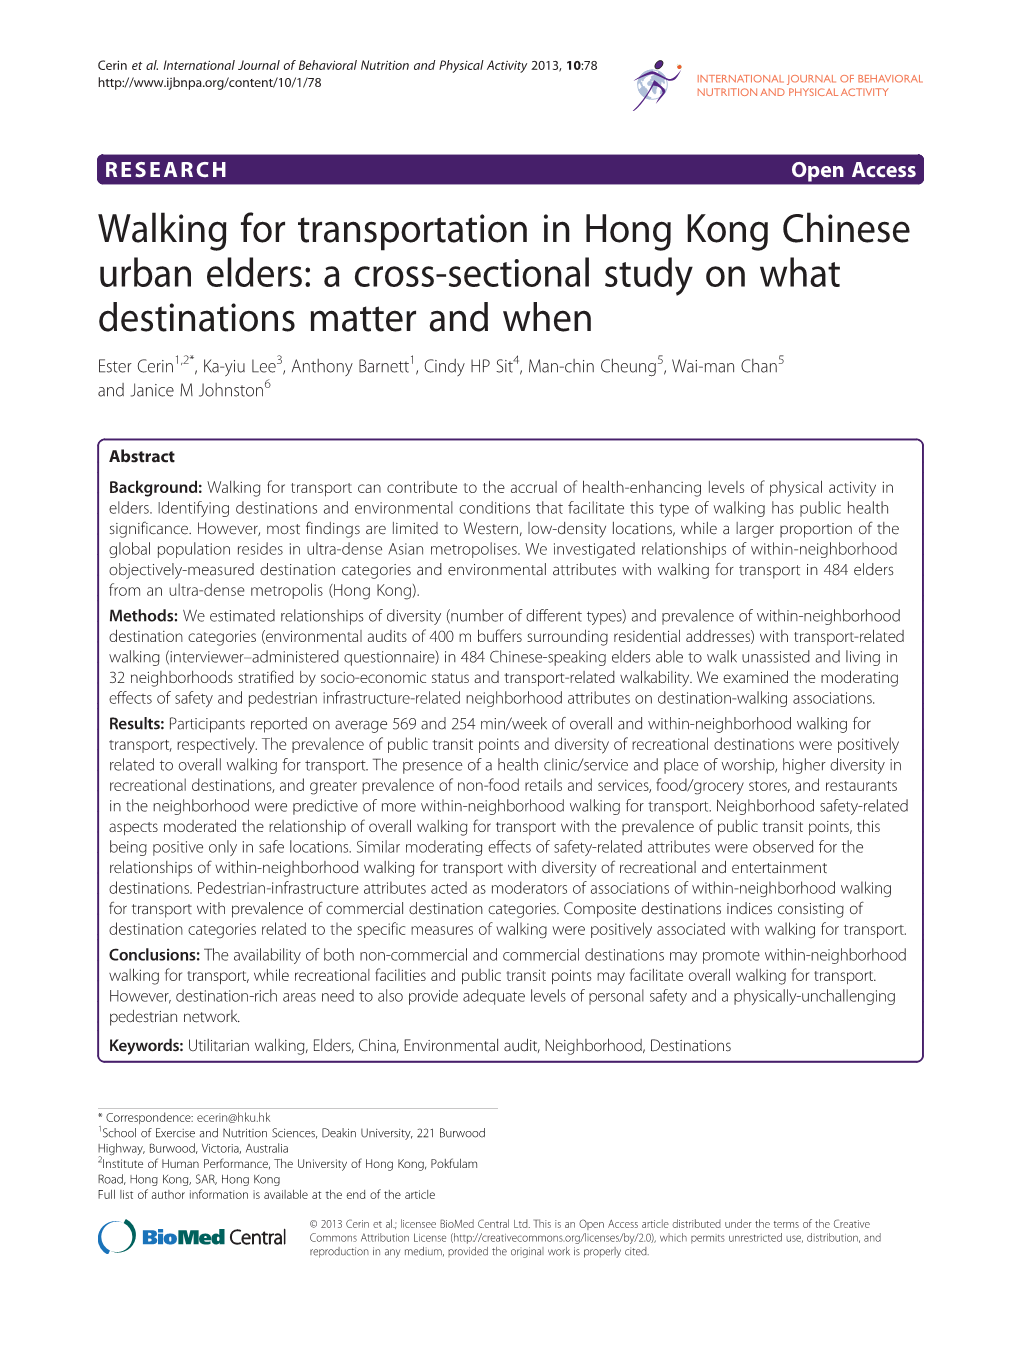 Walking for Transportation in Hong Kong Chinese Urban Elders: a Cross